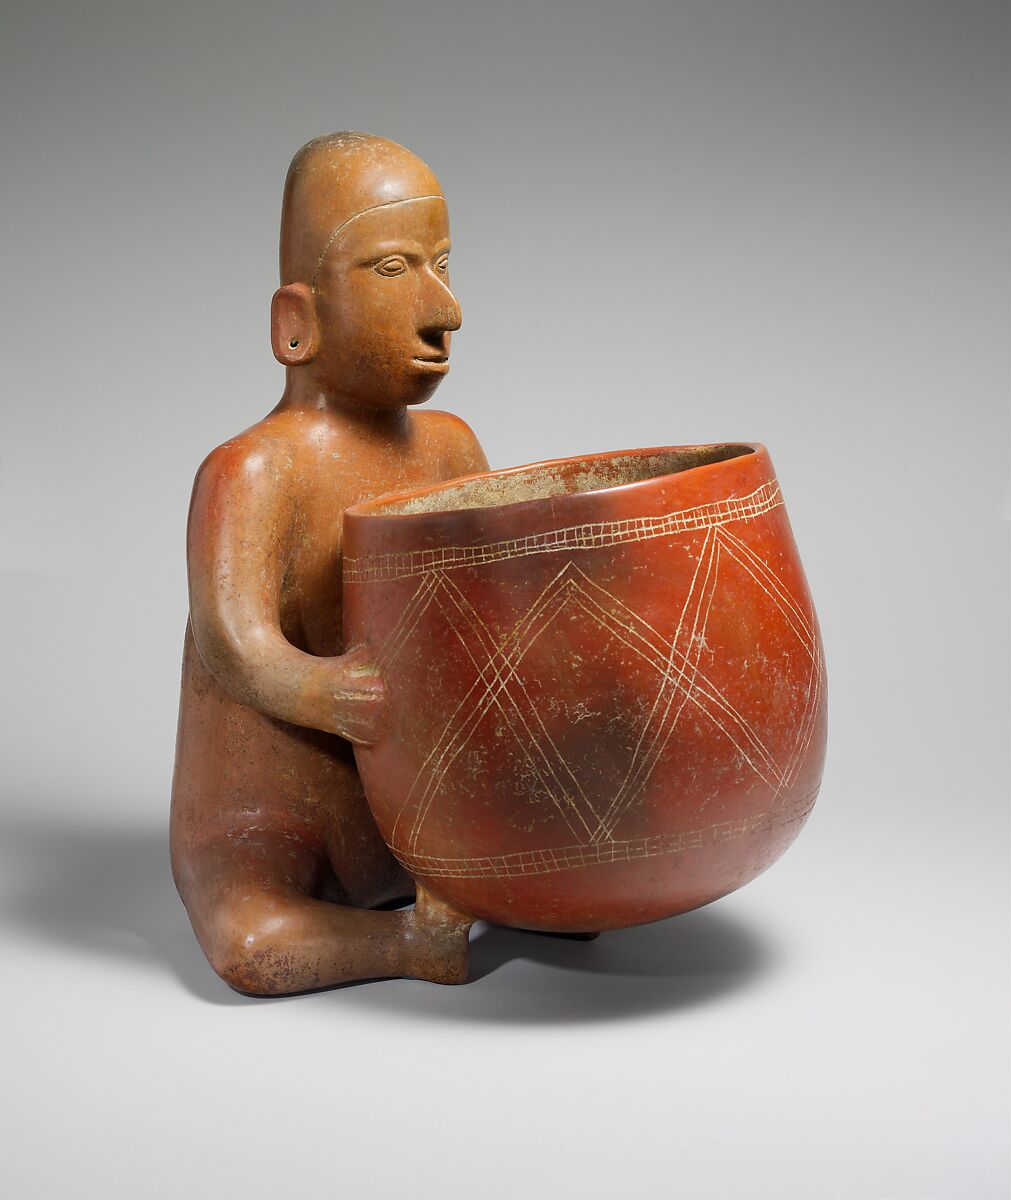 Seated Figure with Vessel, Ceramic, Colima